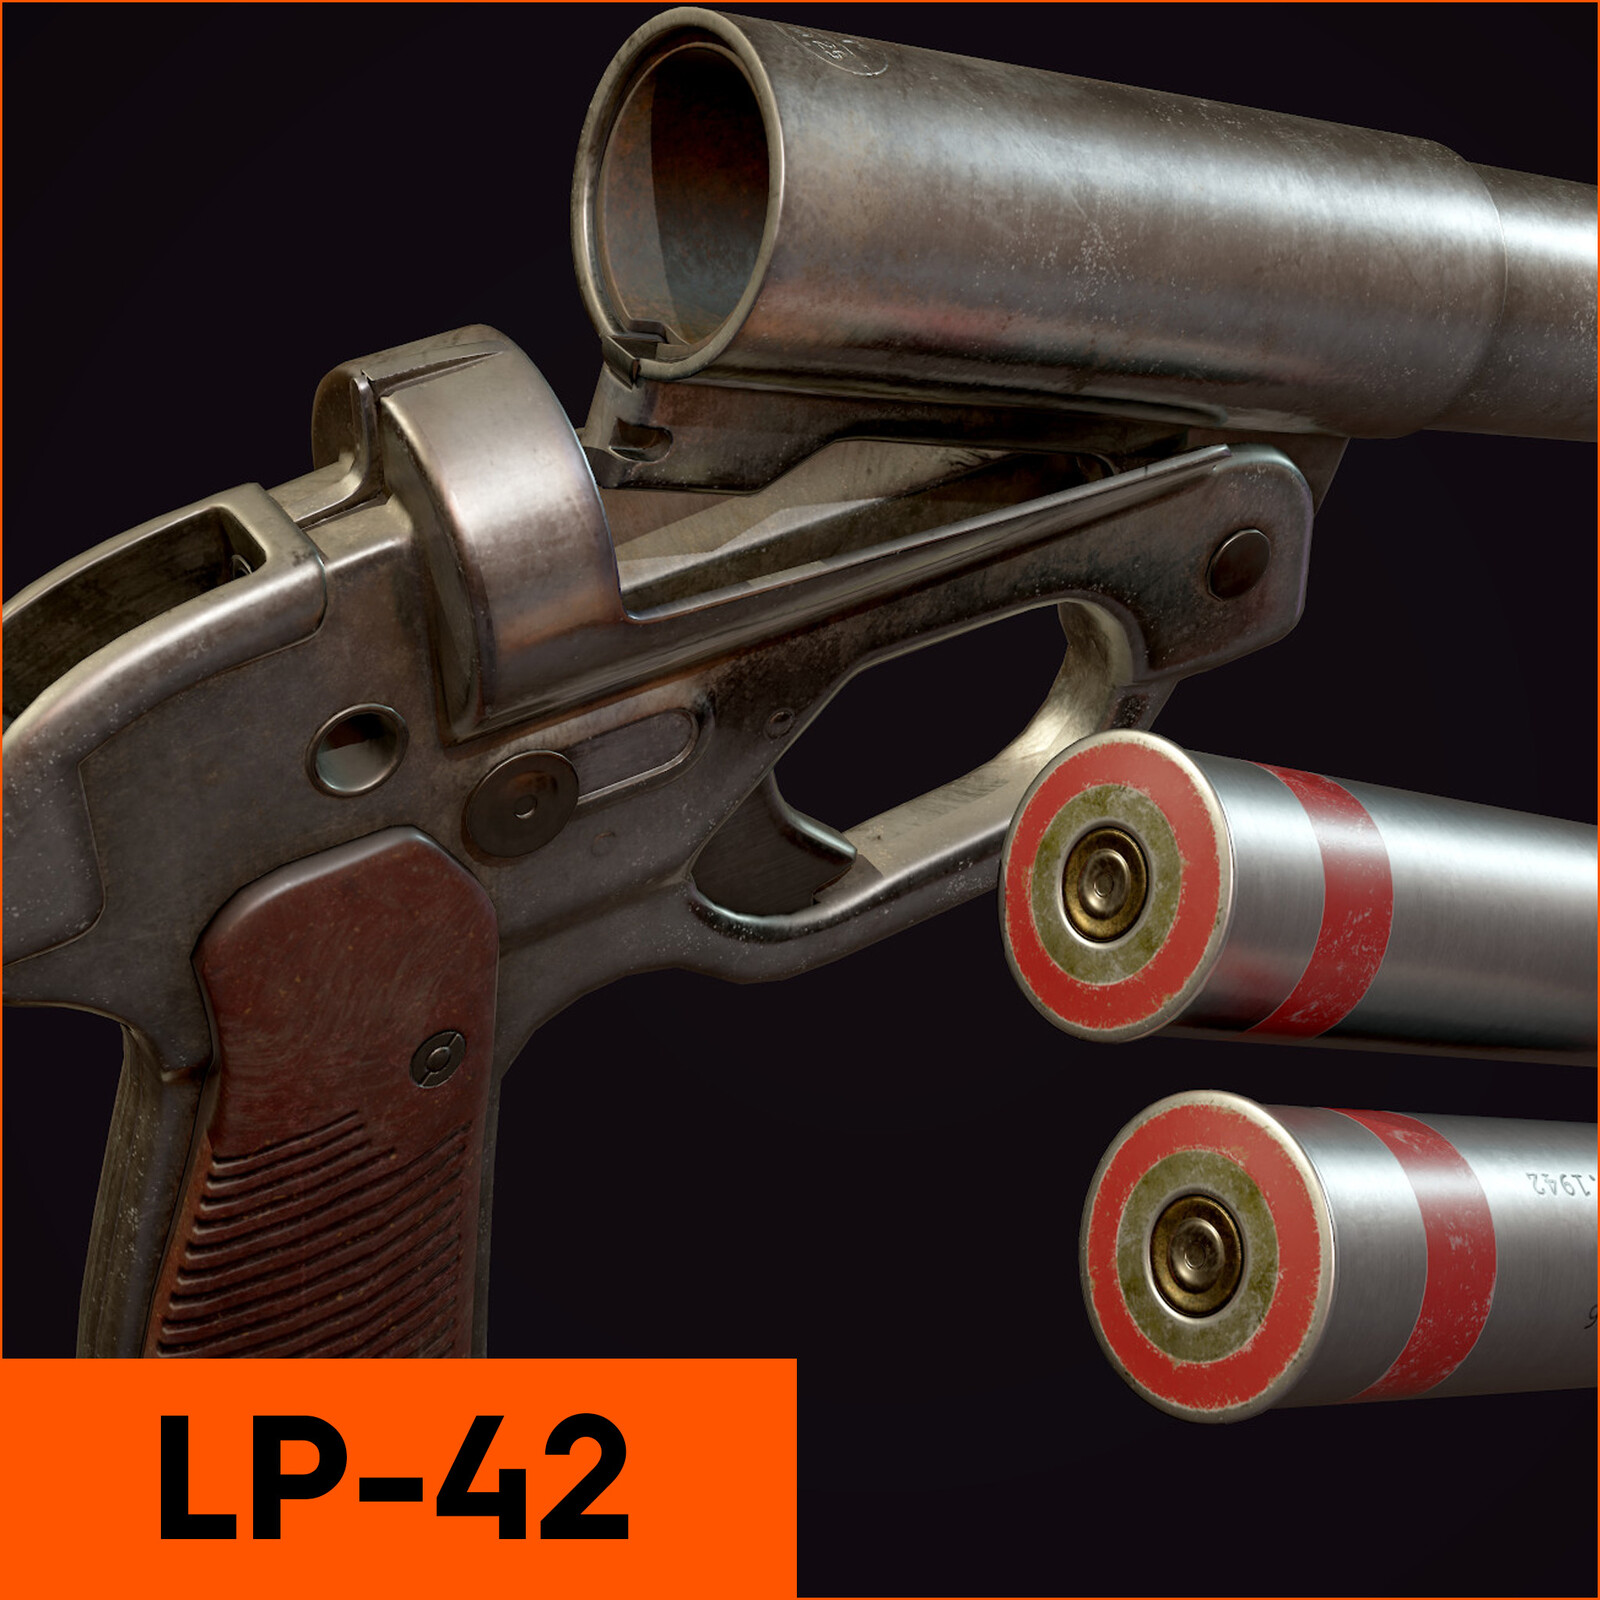 LP-42 Flare Pistol